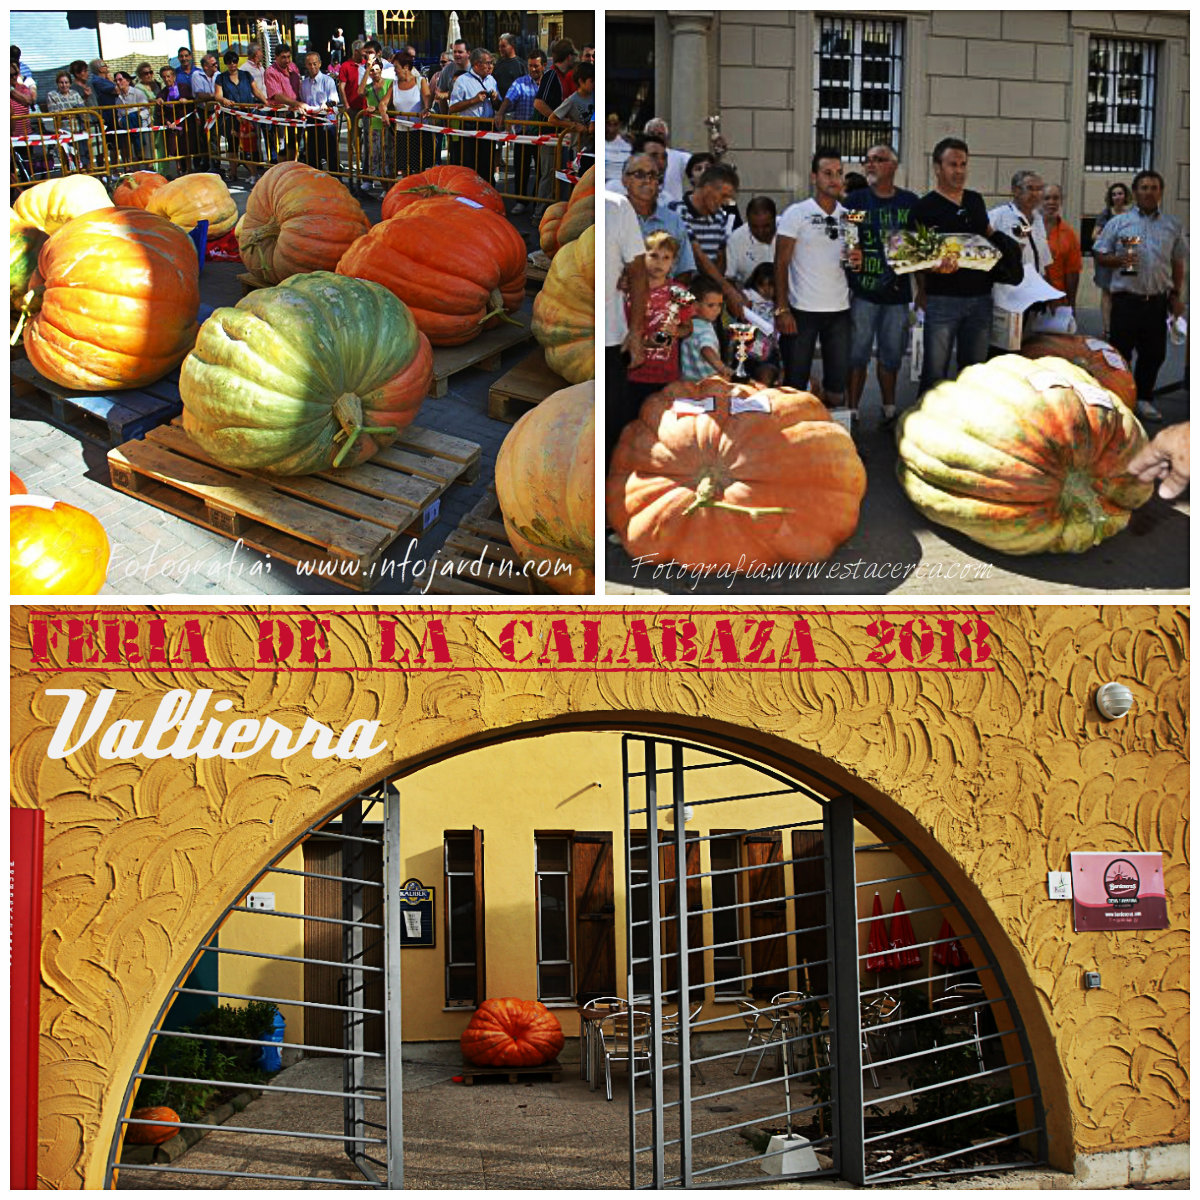 Calabaza 2013